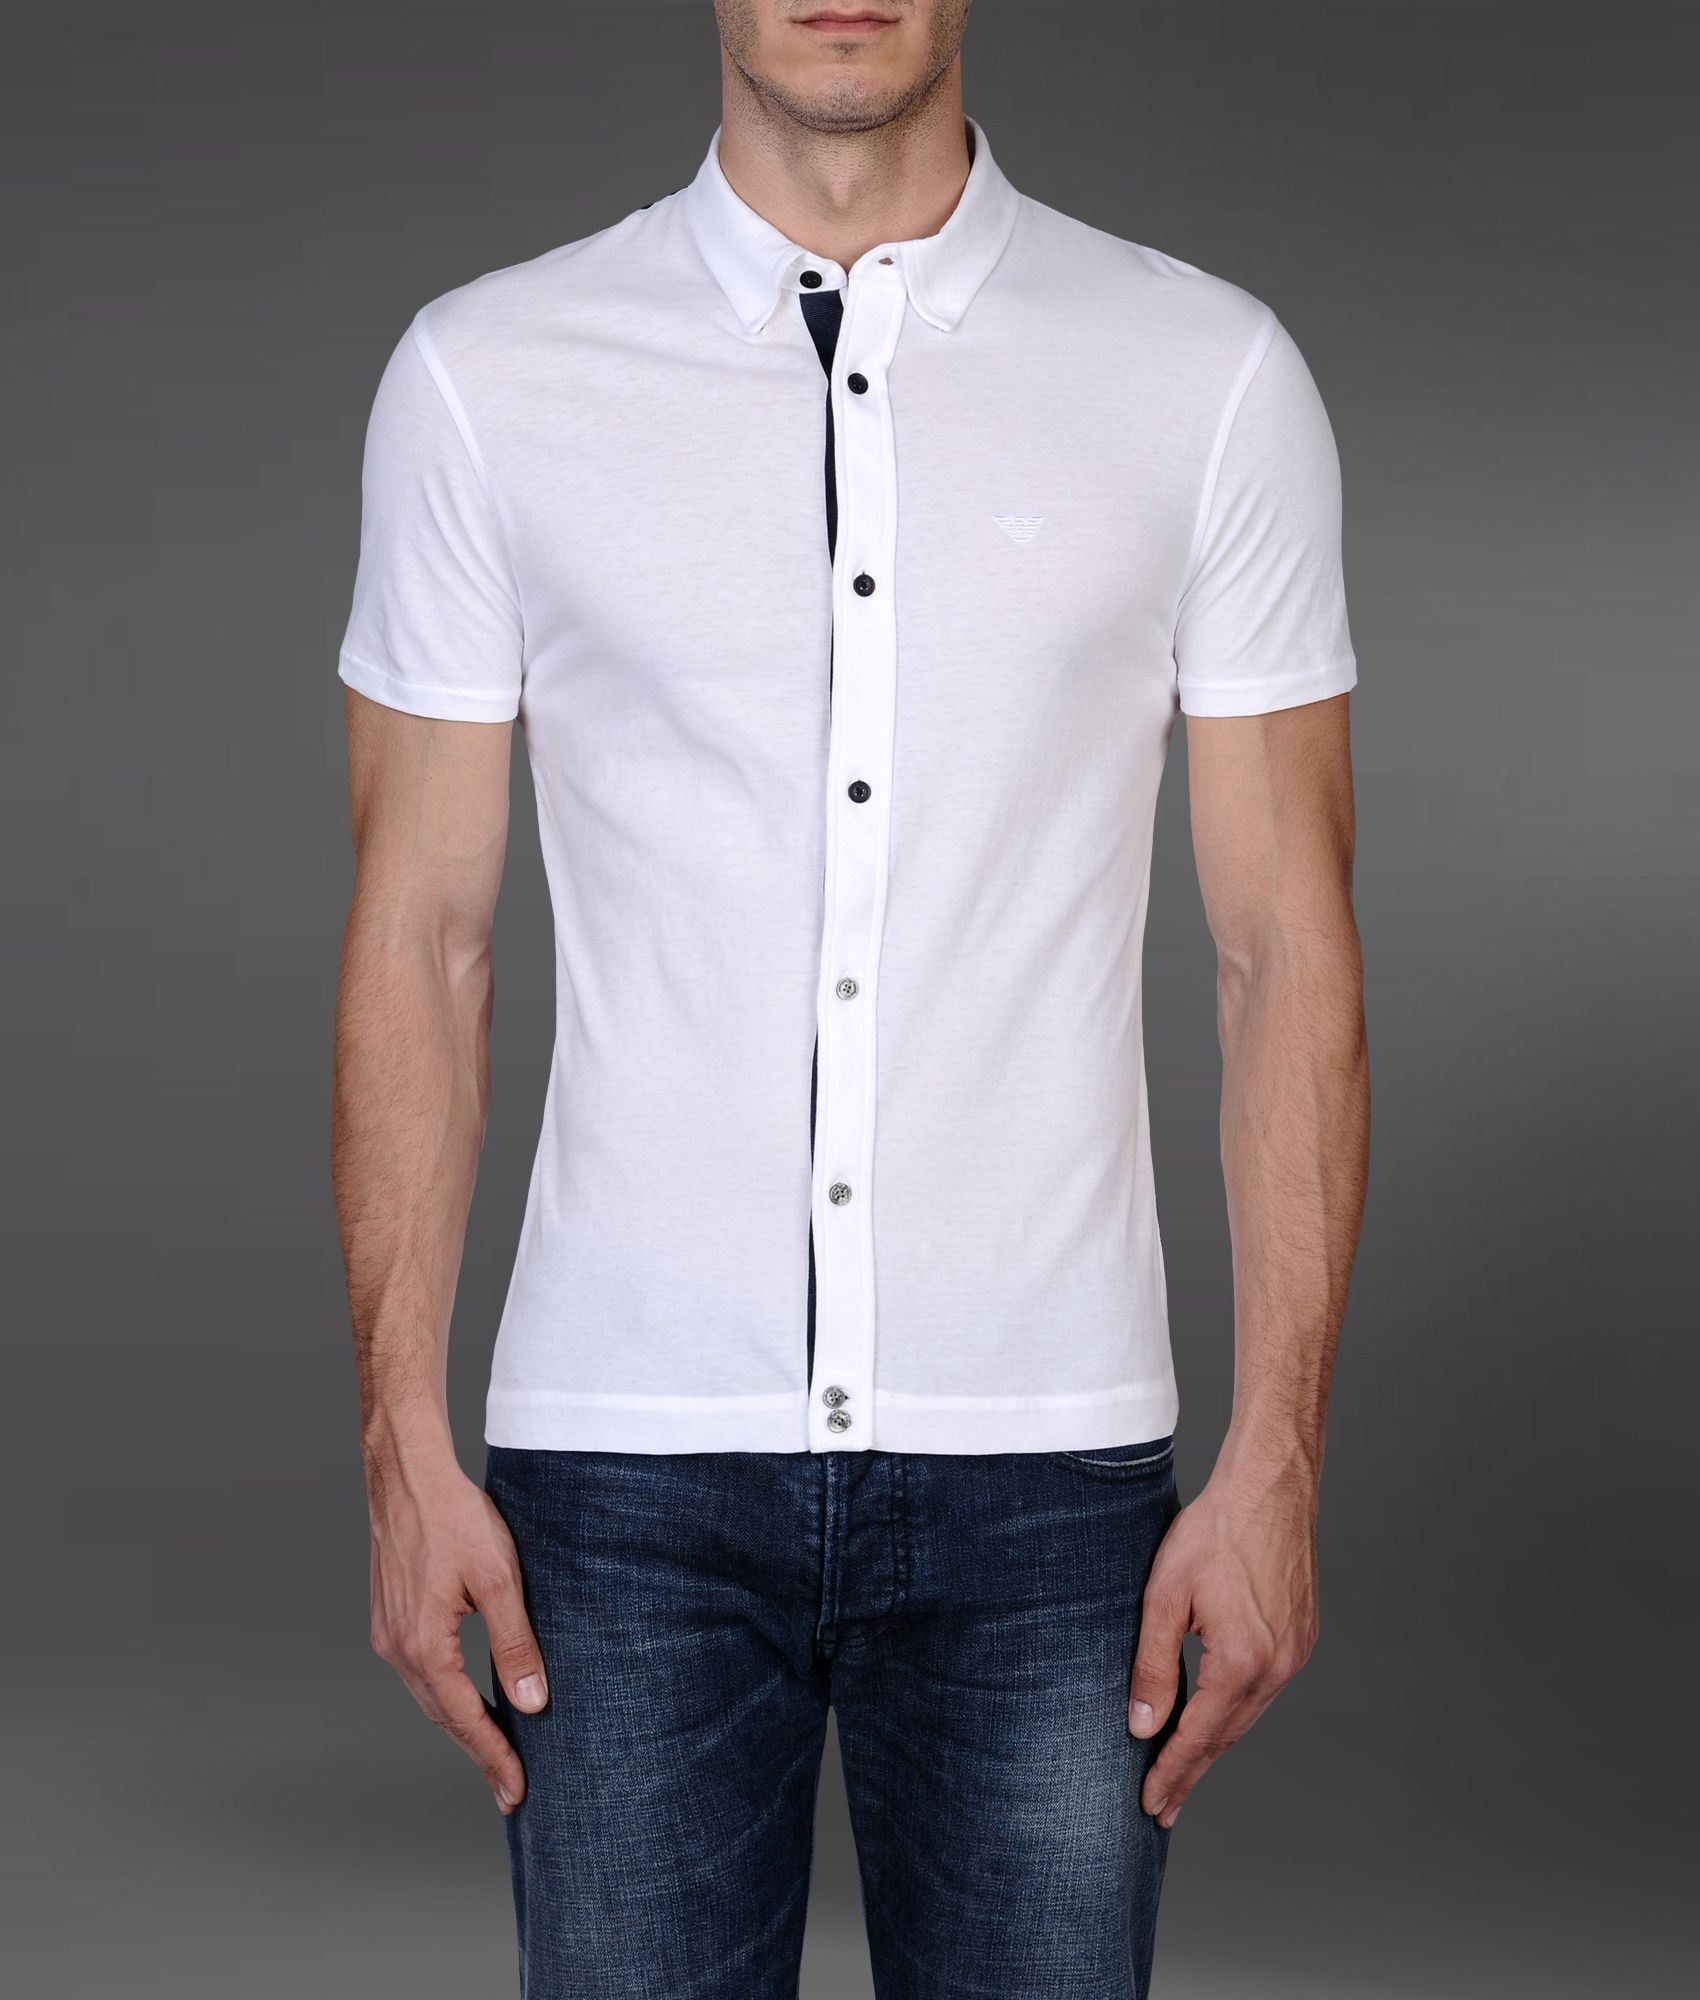 Emporio Armani Short Sleeve Shirt in 